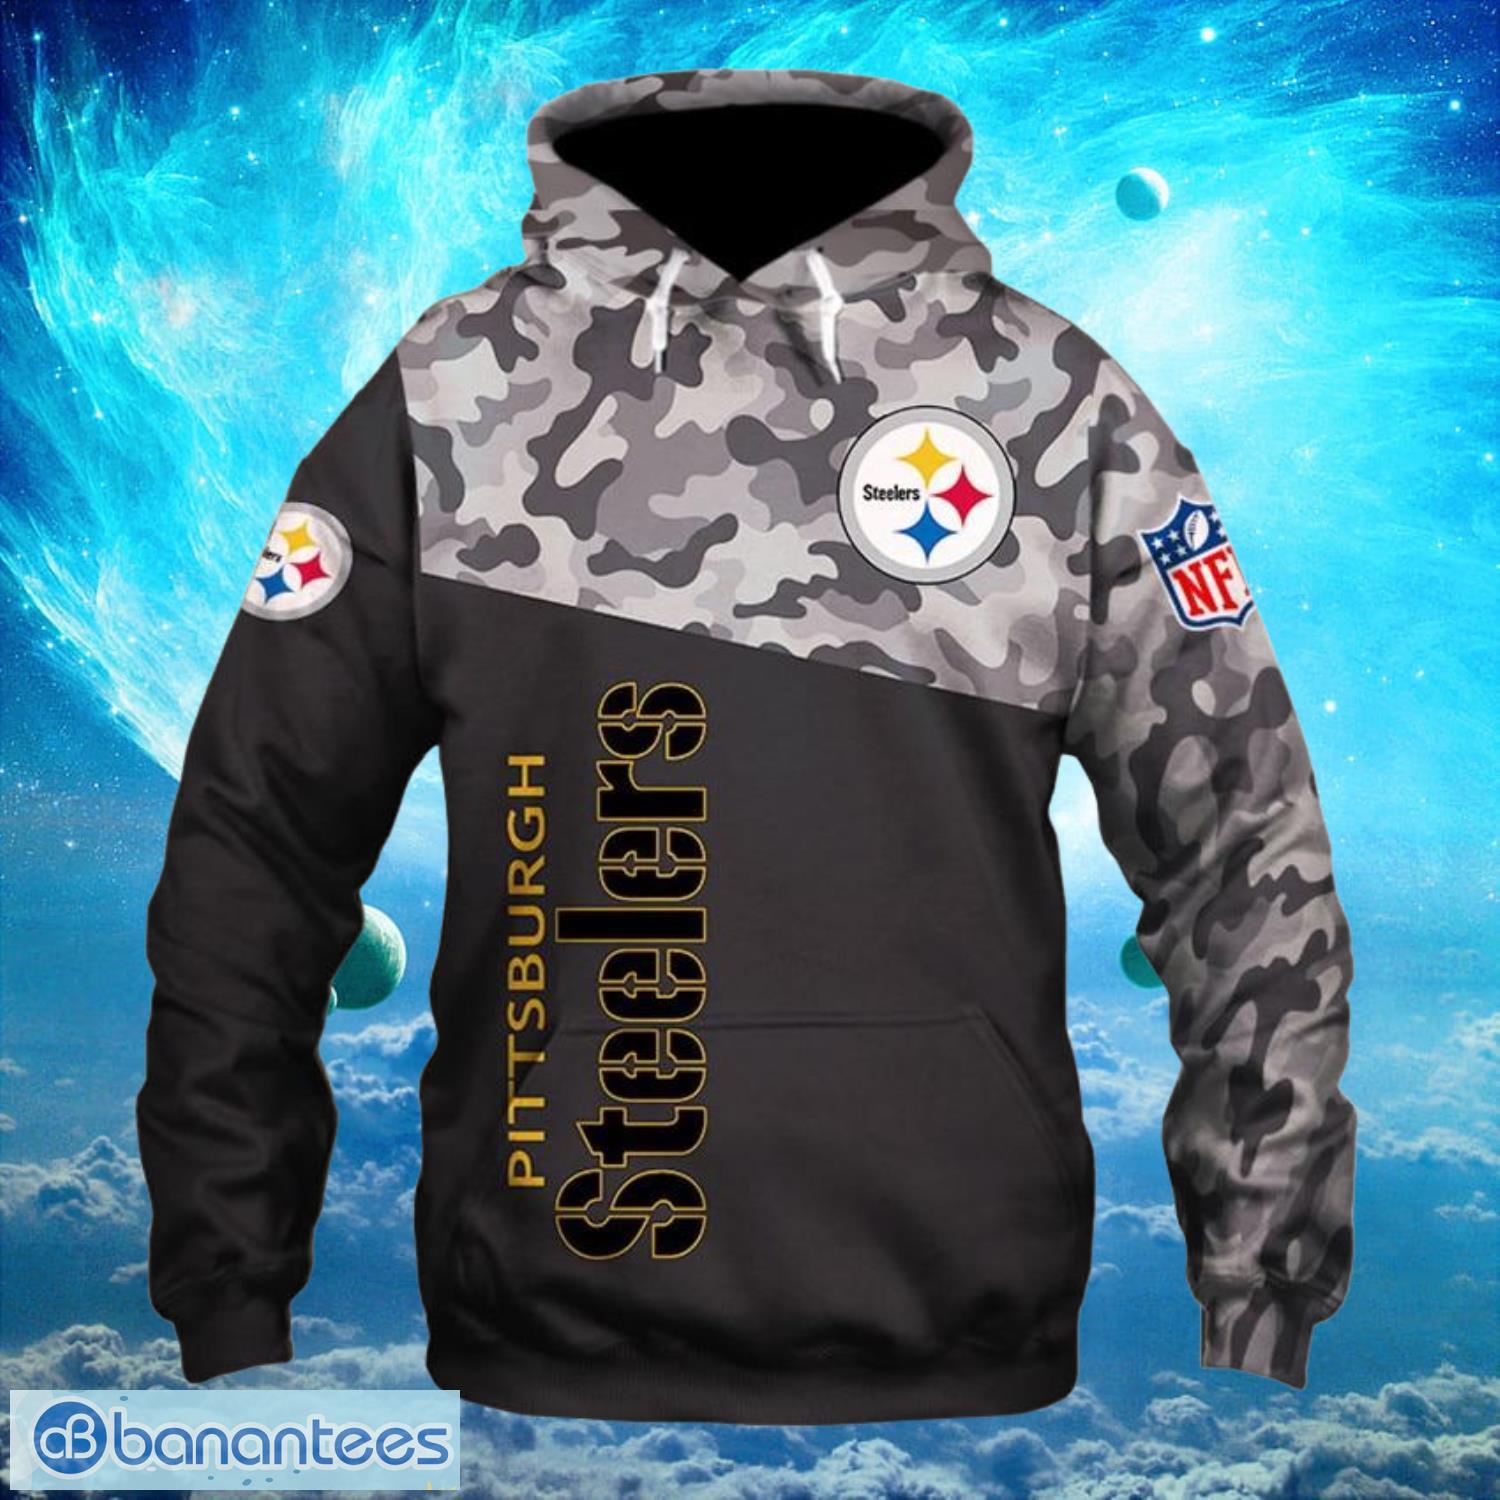 Pittsburgh Steelers Logo Dark Type Hoodies Full Over Print 3 Product Photo 1